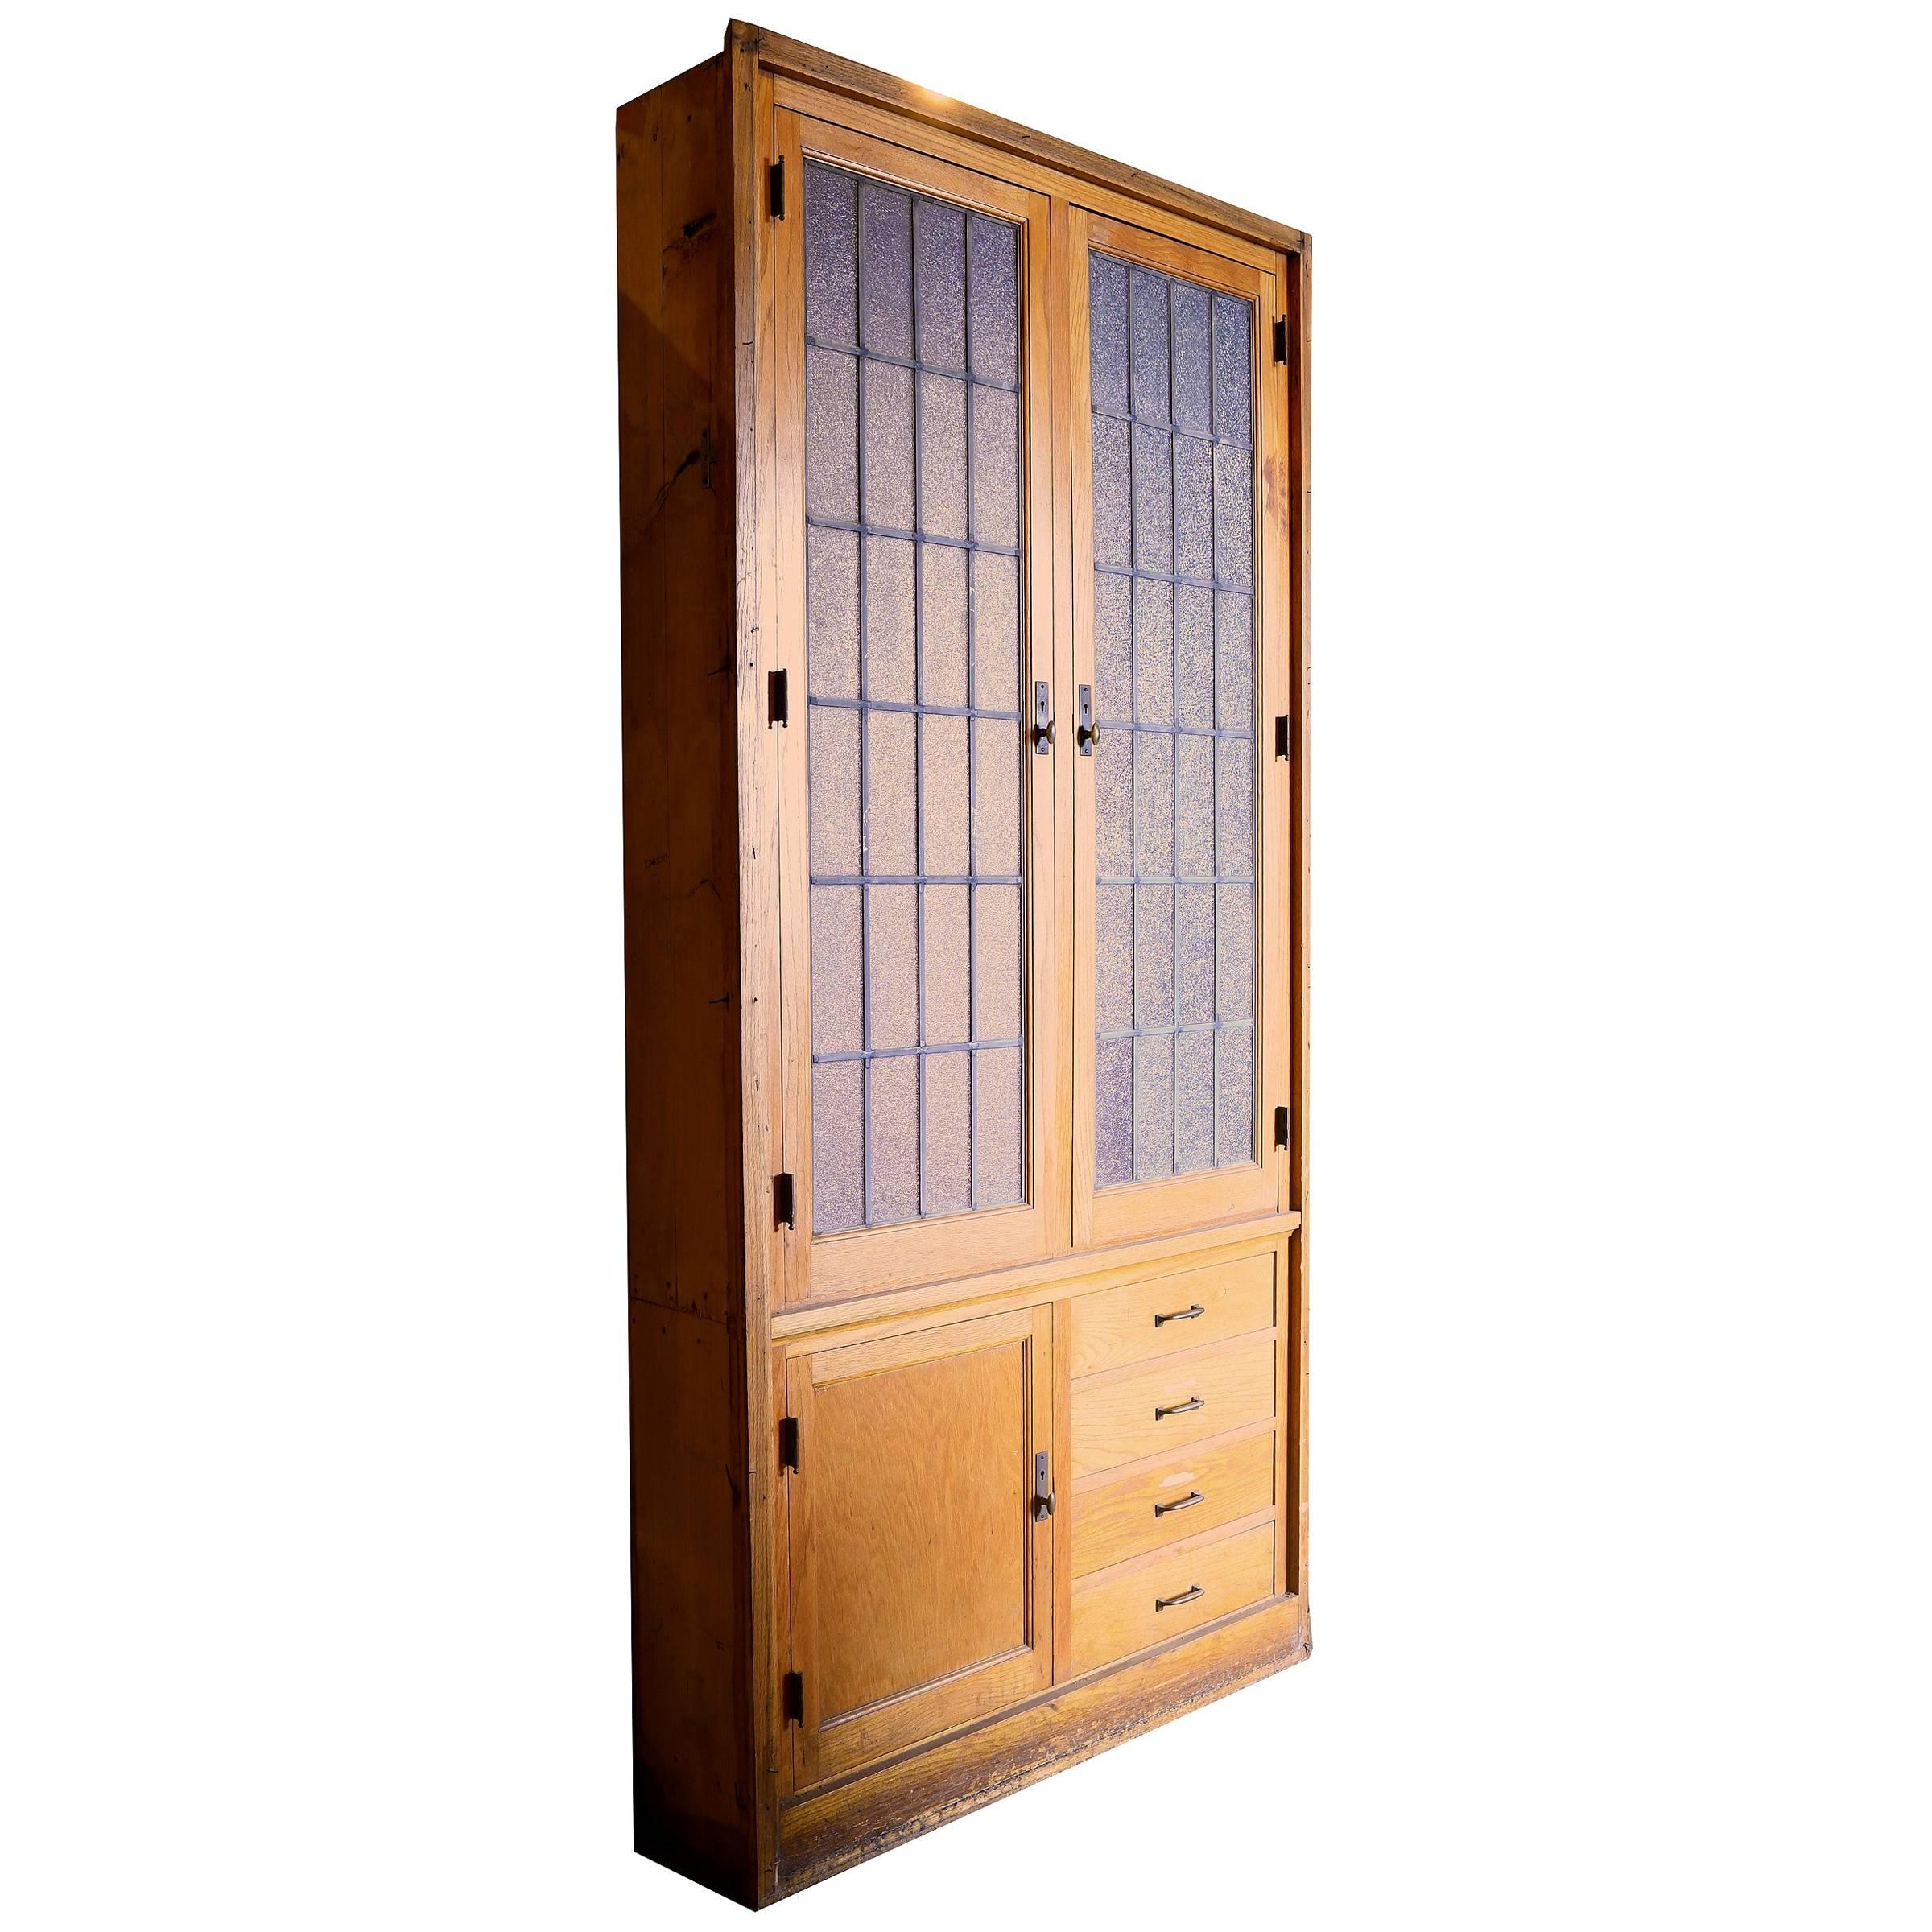 Oak Schoolhouse Cabinet with Leaded Glass Doors